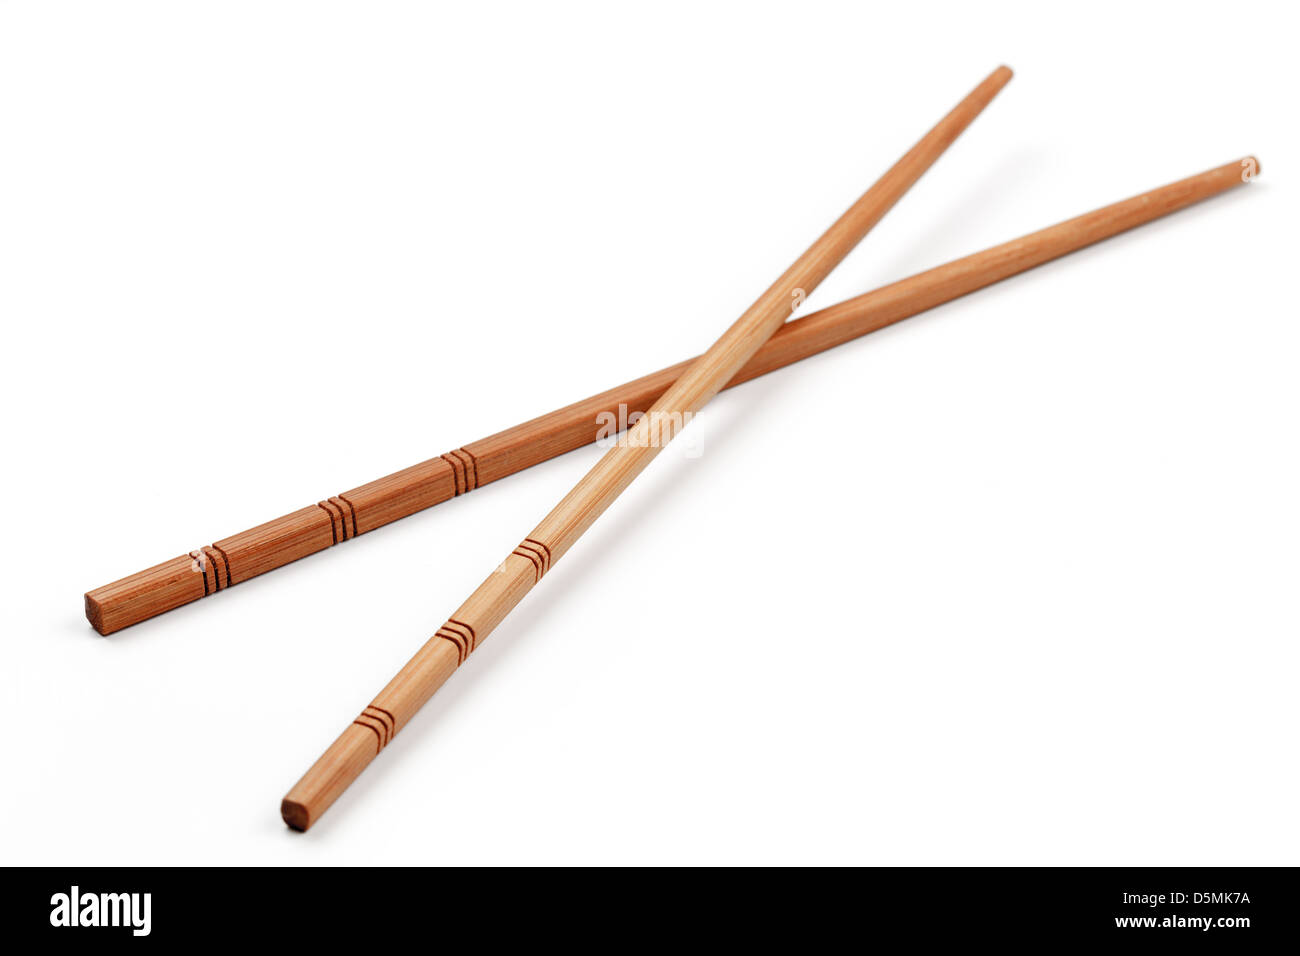 Wooden chopsticks, isolated on white background. Stock Photo